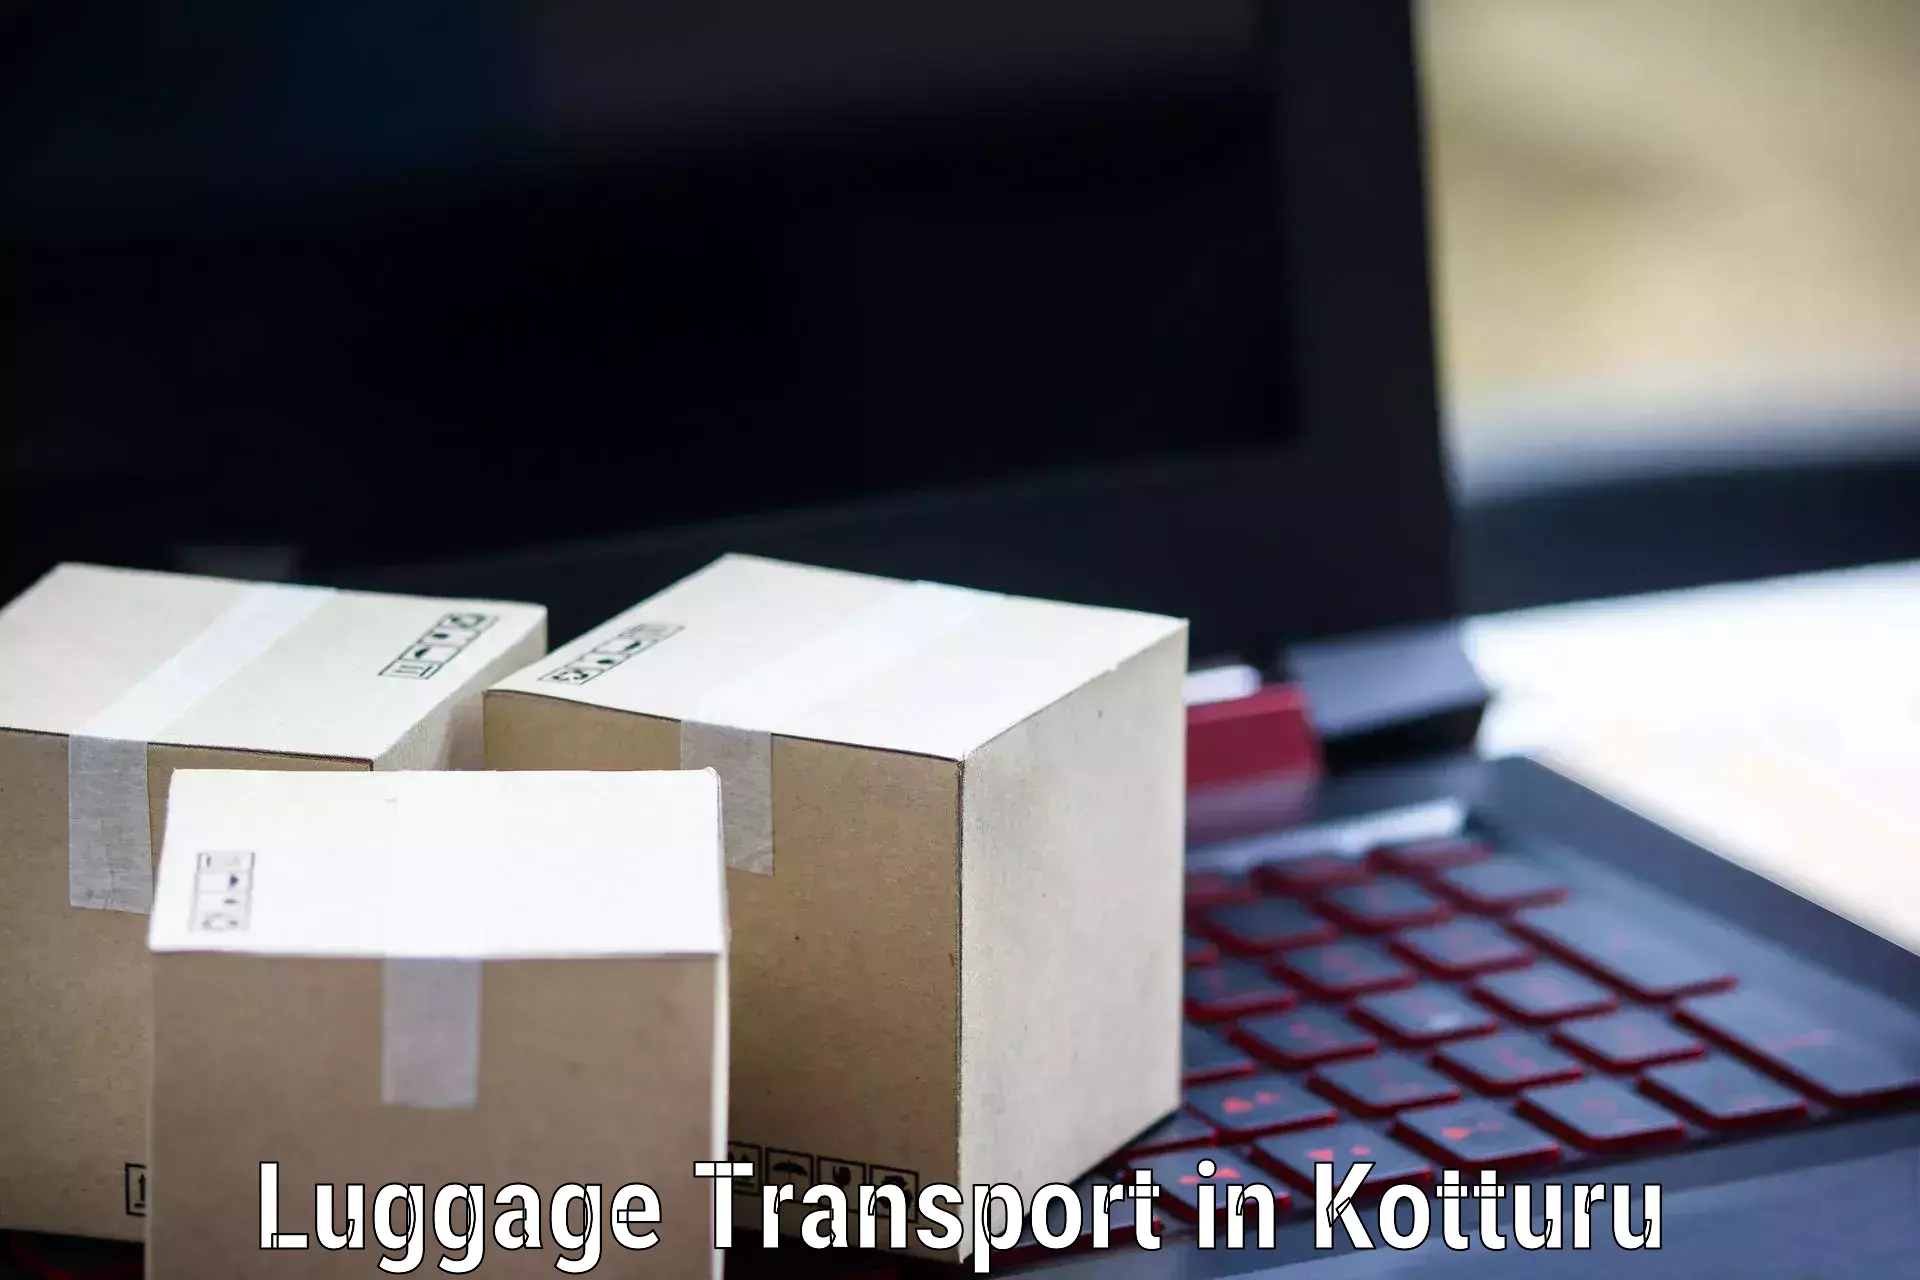 Luggage transport service in Kotturu